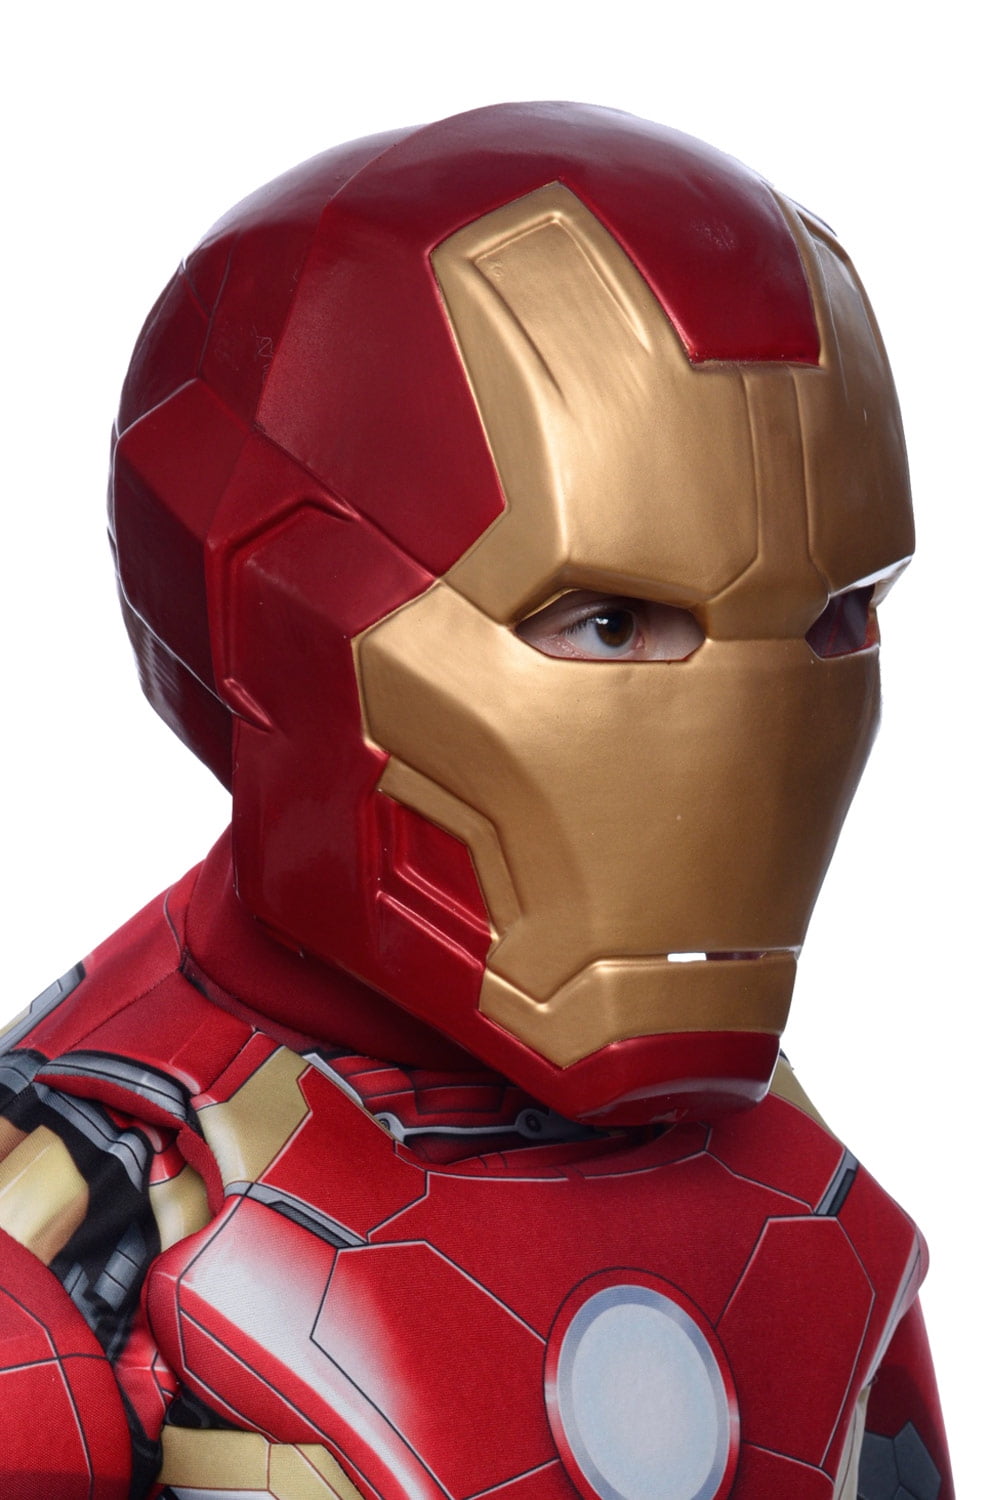 Avengers 20 Iron Man Child Helmet   Walmart.com